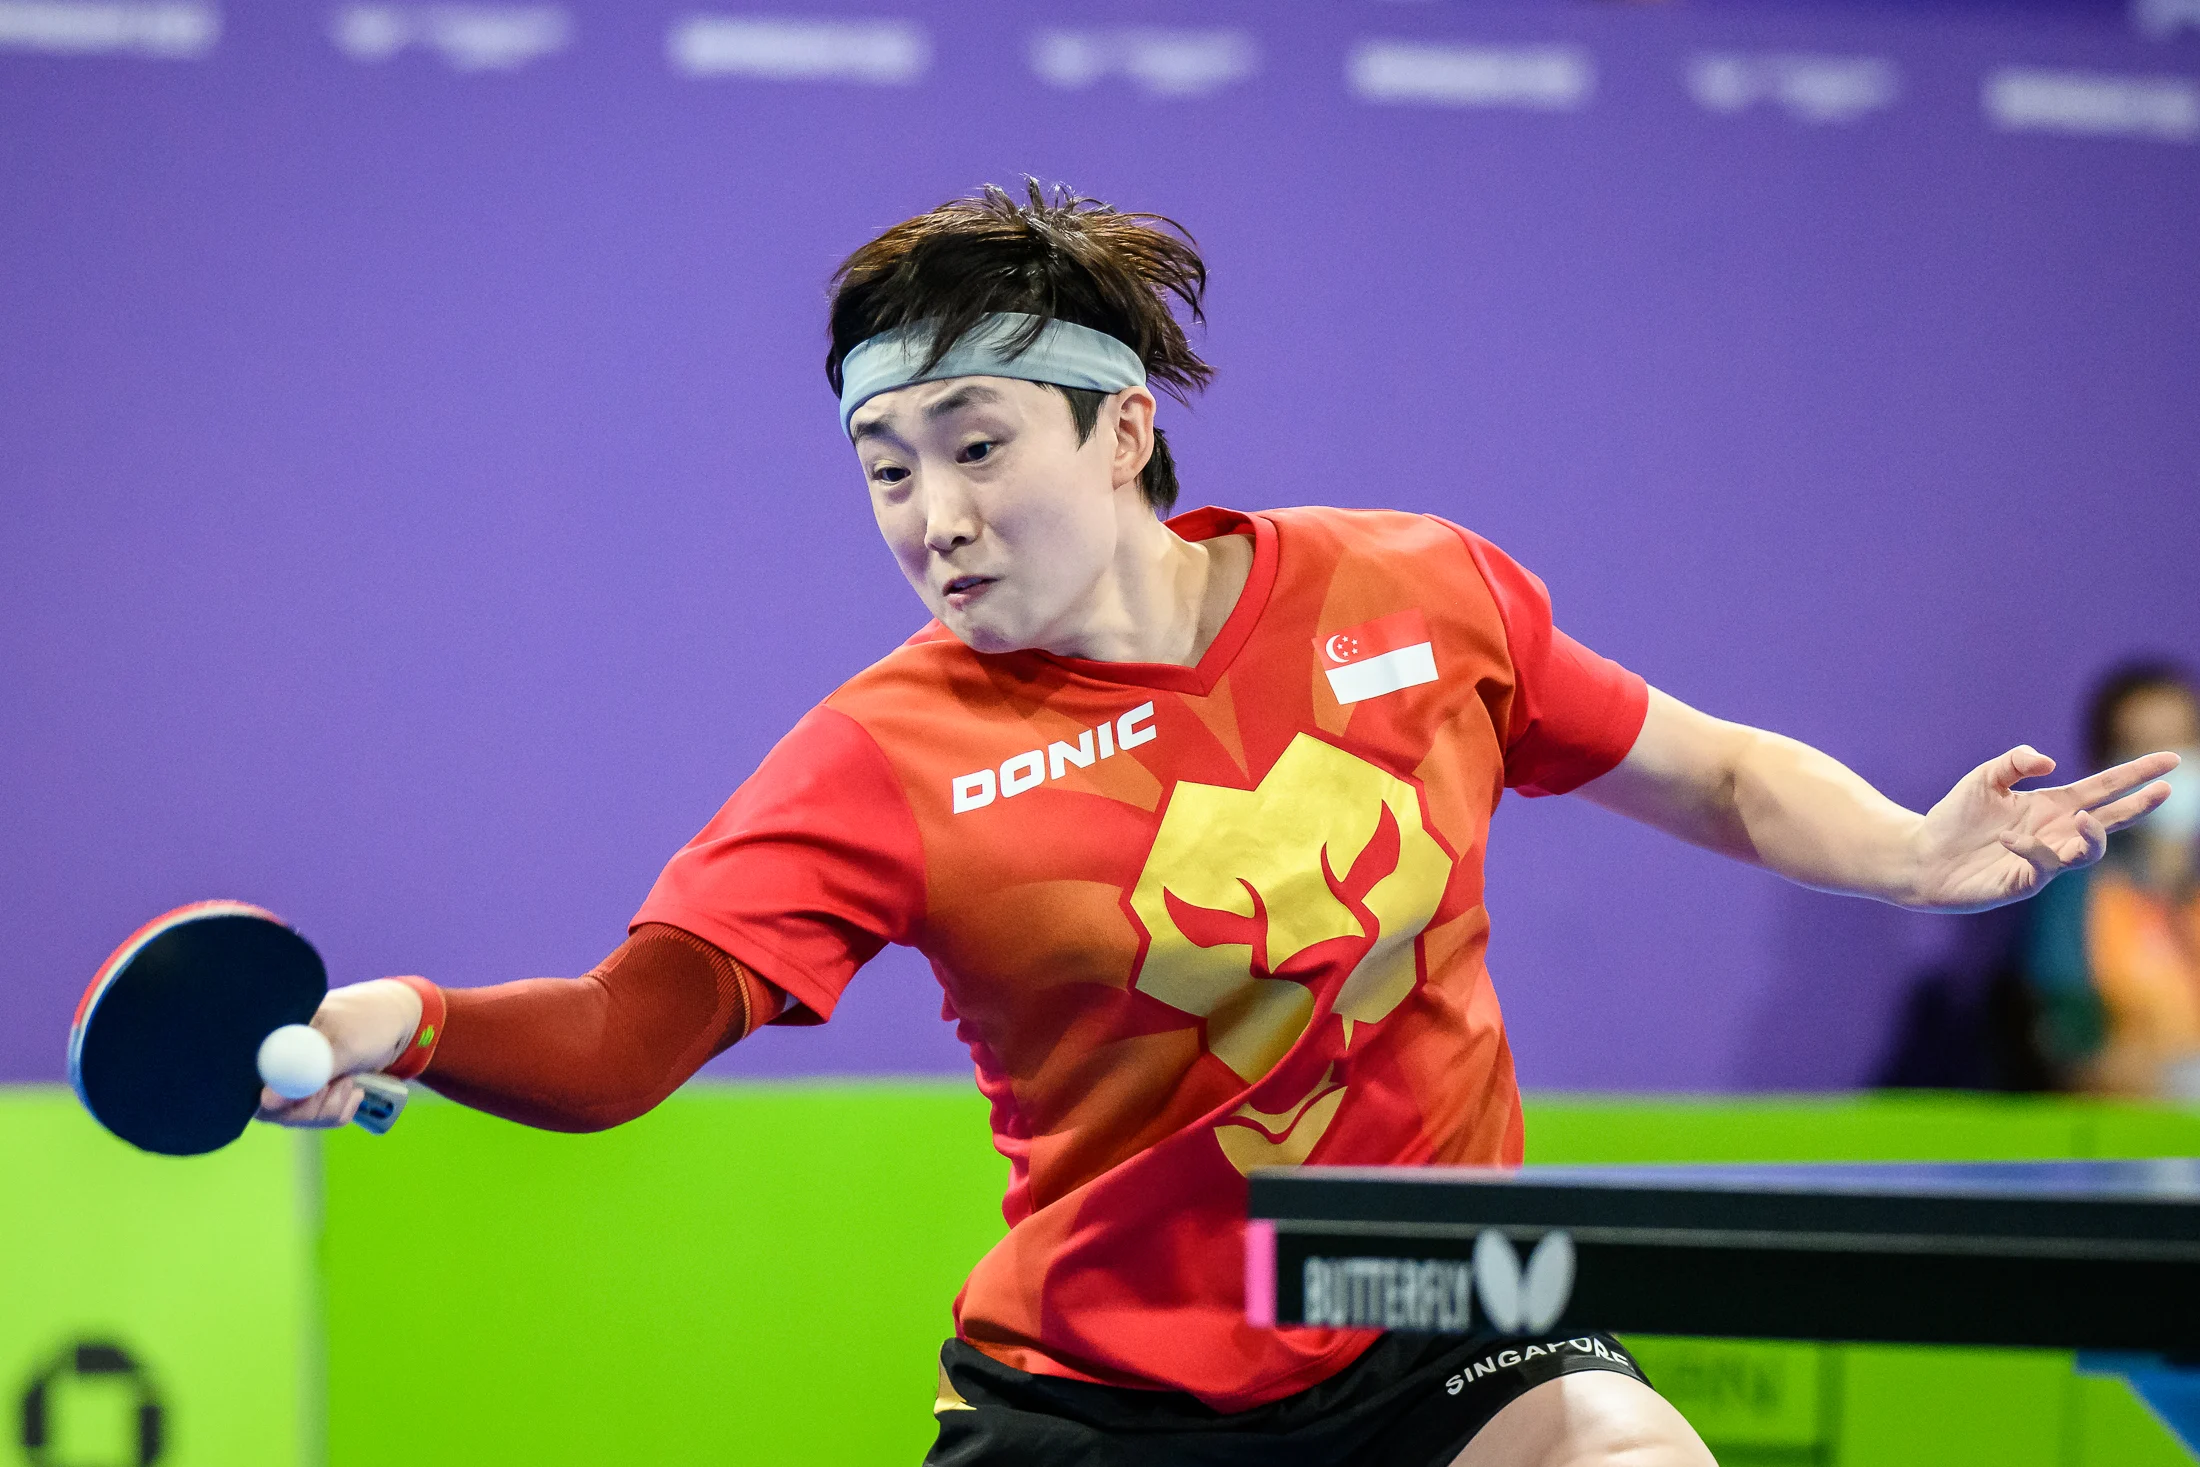 20220731_-_Table Tennis Photo by Andy Chua_051-jpg-1